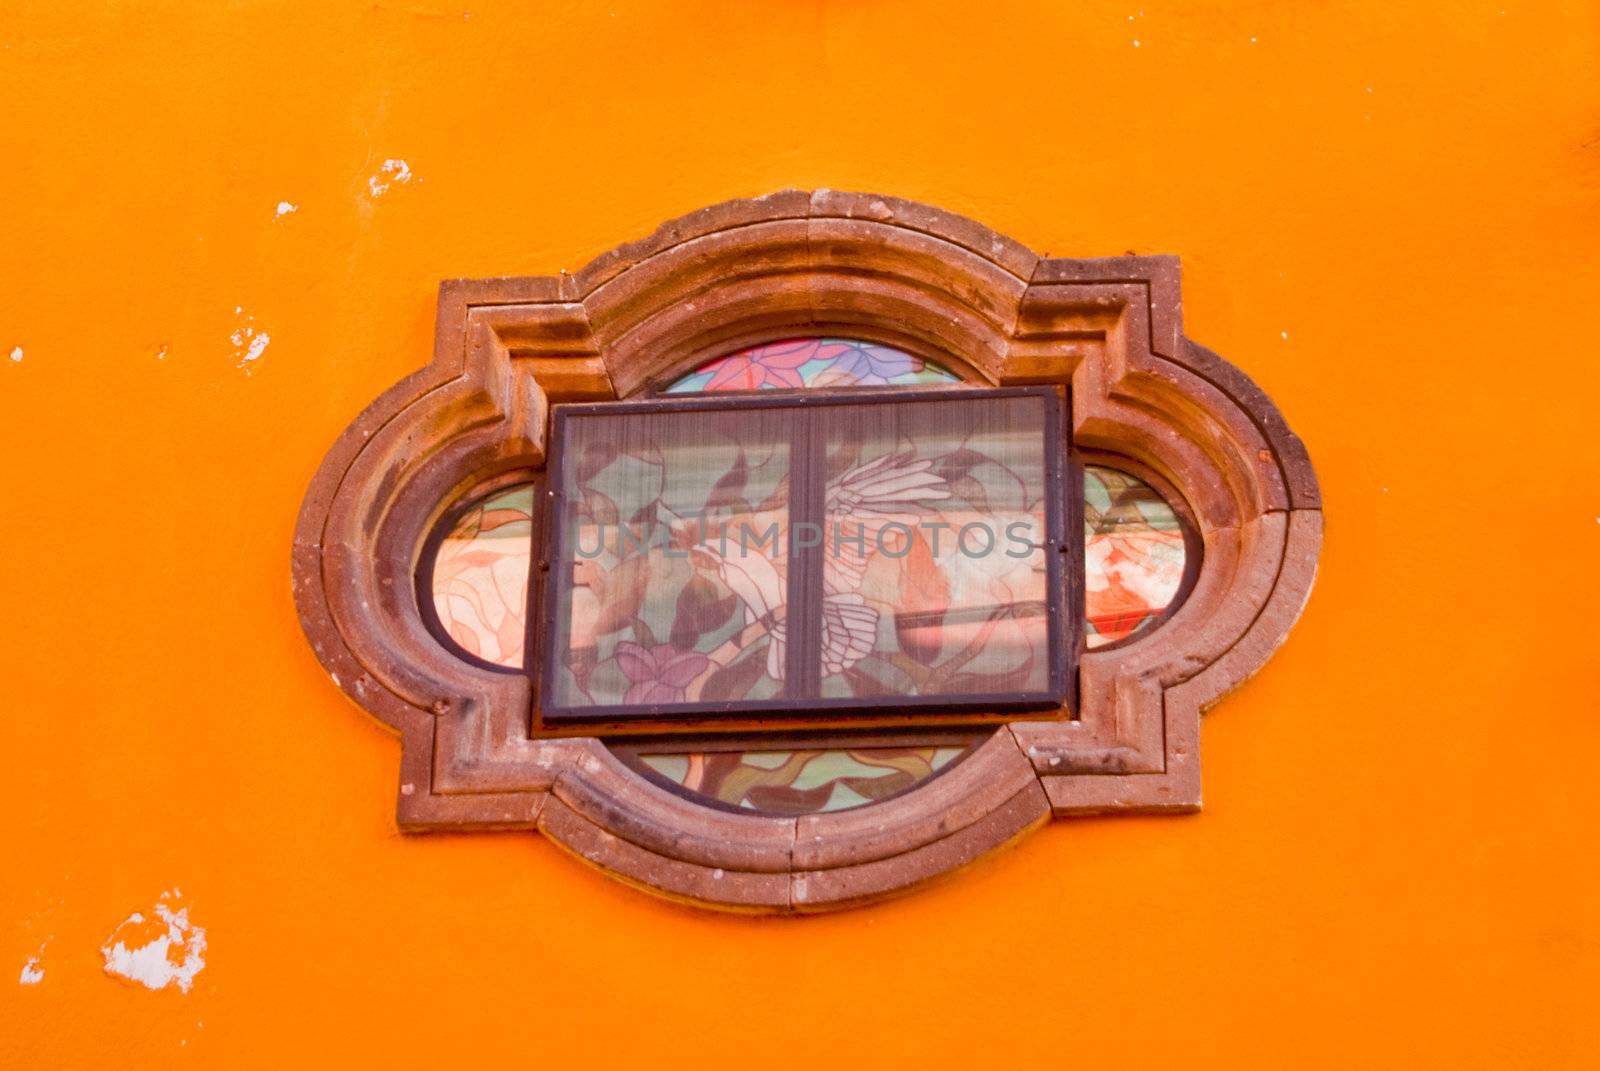 Unique Mexican Window on Orange Adobe Wall by emattil